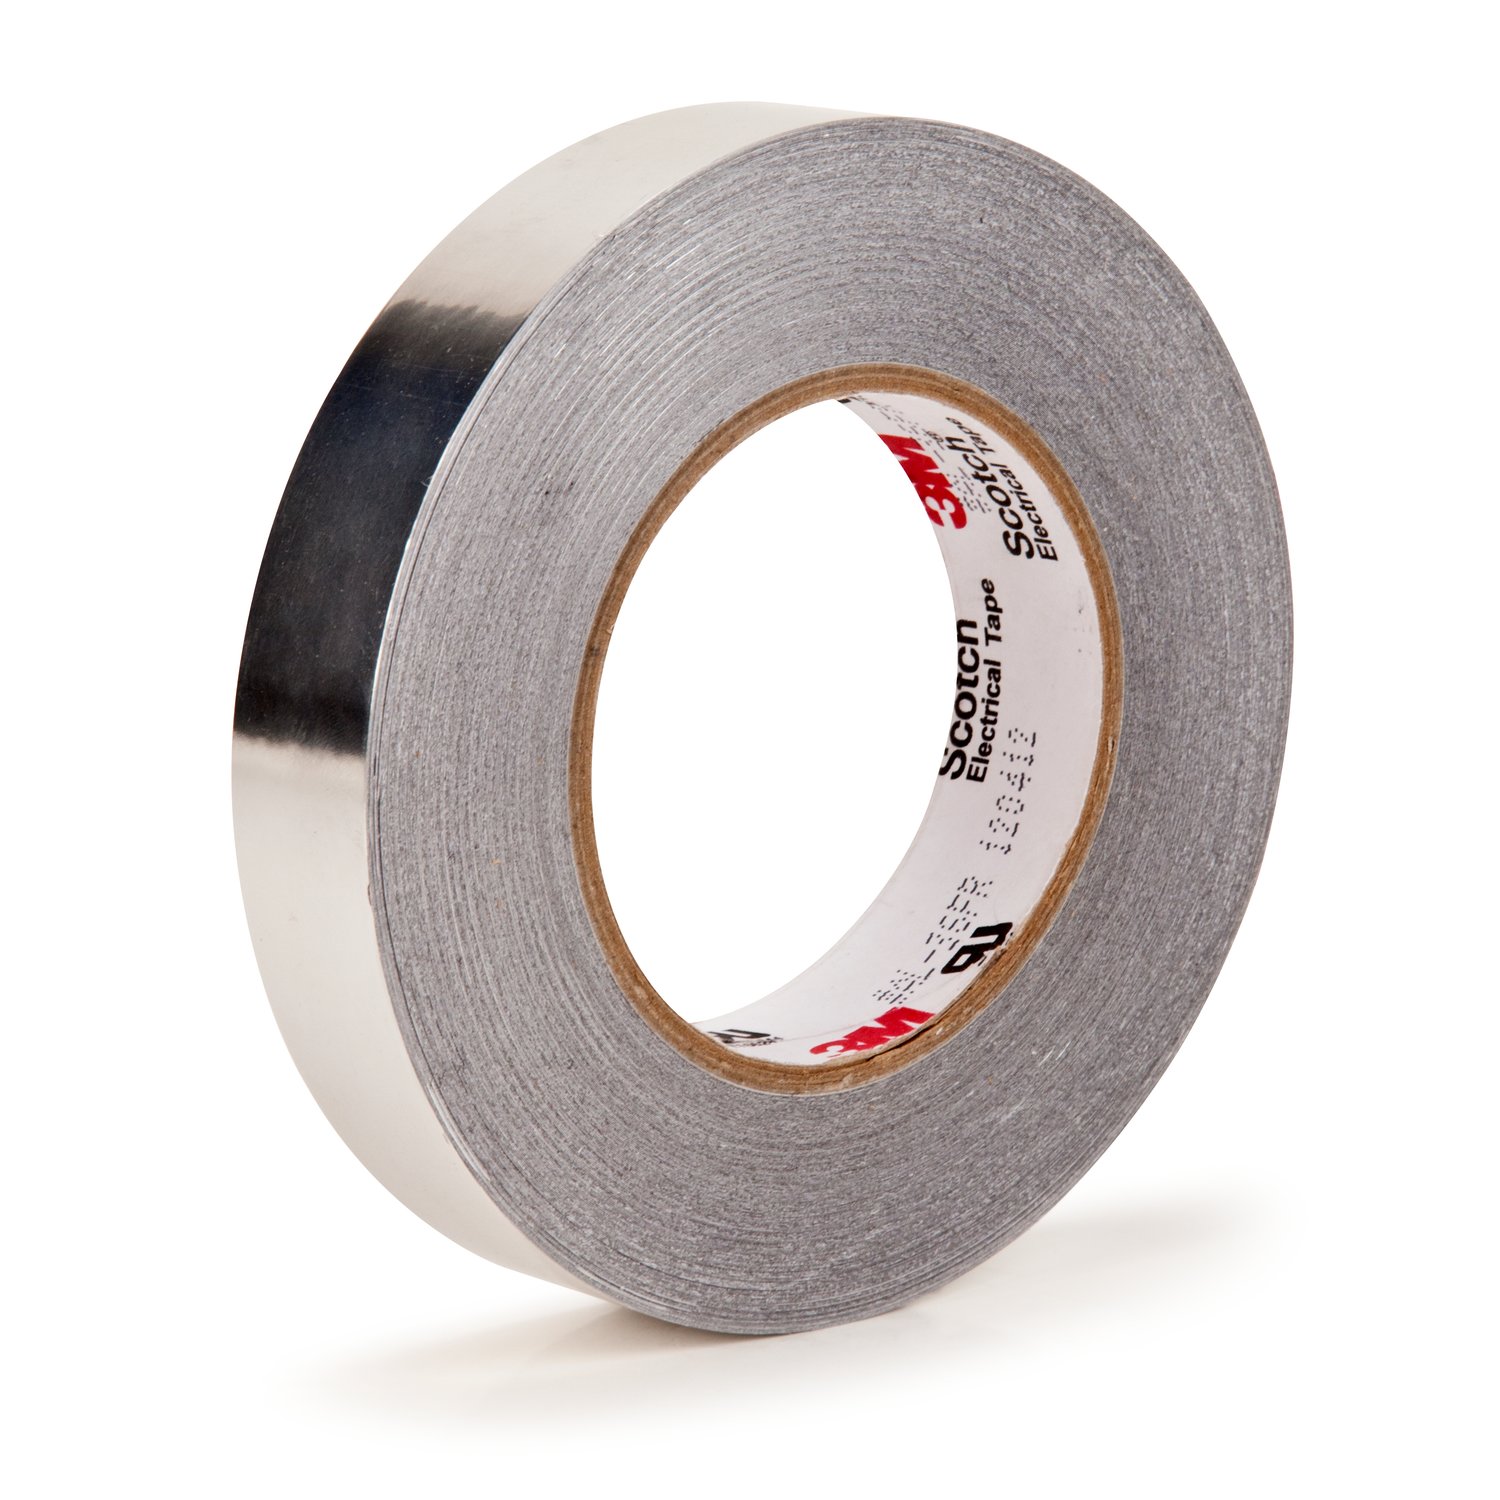 7010305707 - 3M Laminated Aluminum Foil EMI Shielding Tape AL-36FR, 6 in x 54-1/2
yds, 2 Rolls/Case